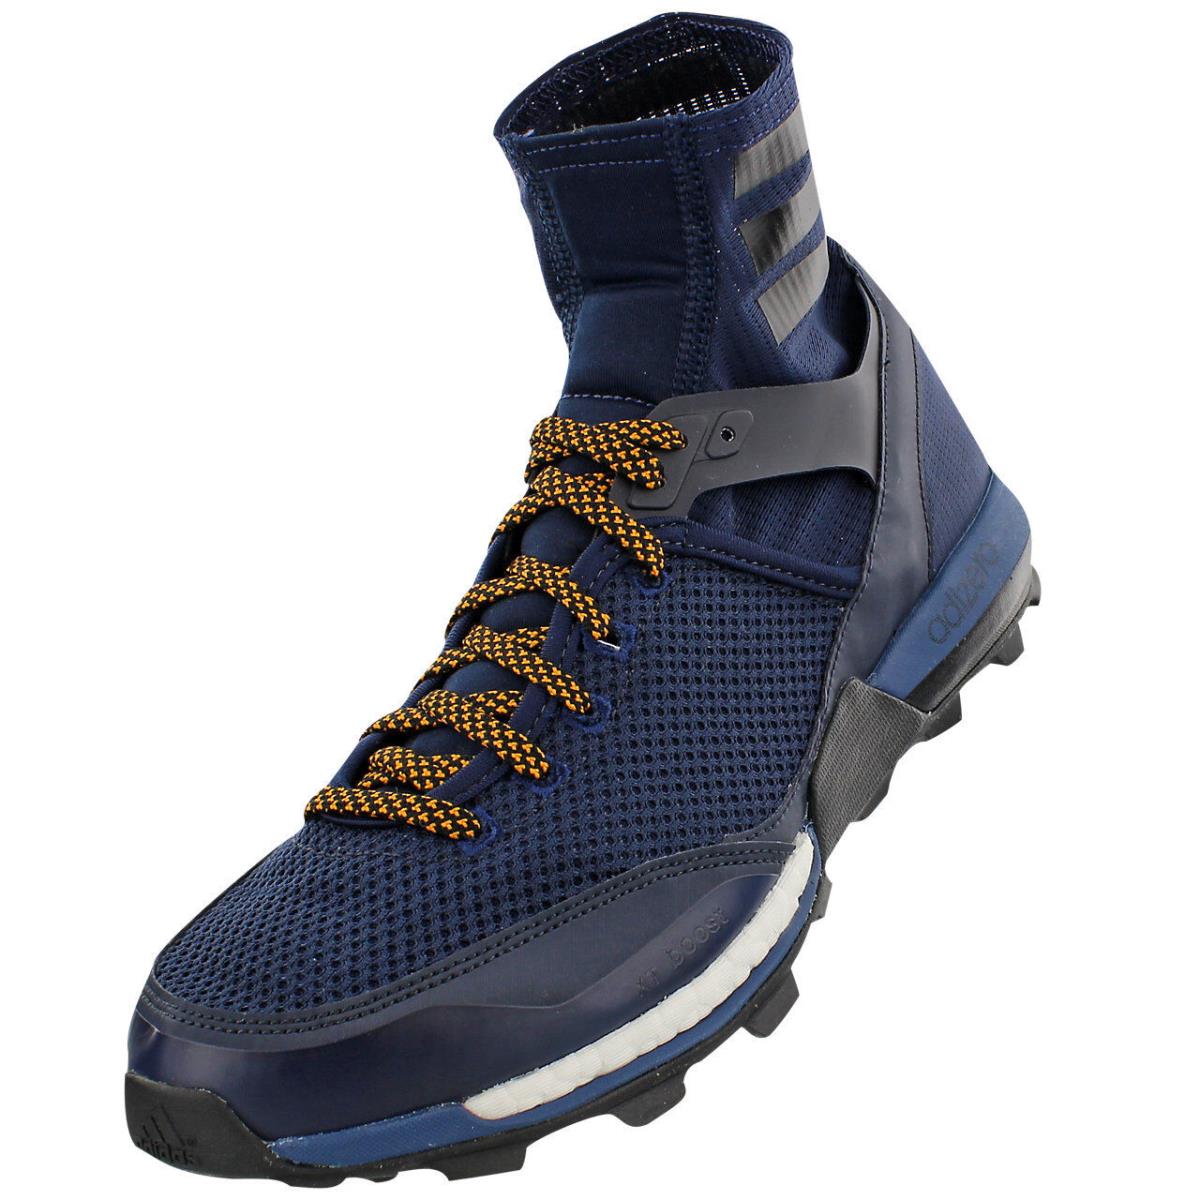 Adidas XT Boost Mens Trail Running/hiking Shoes Size 8.5 Euro 42 Retail